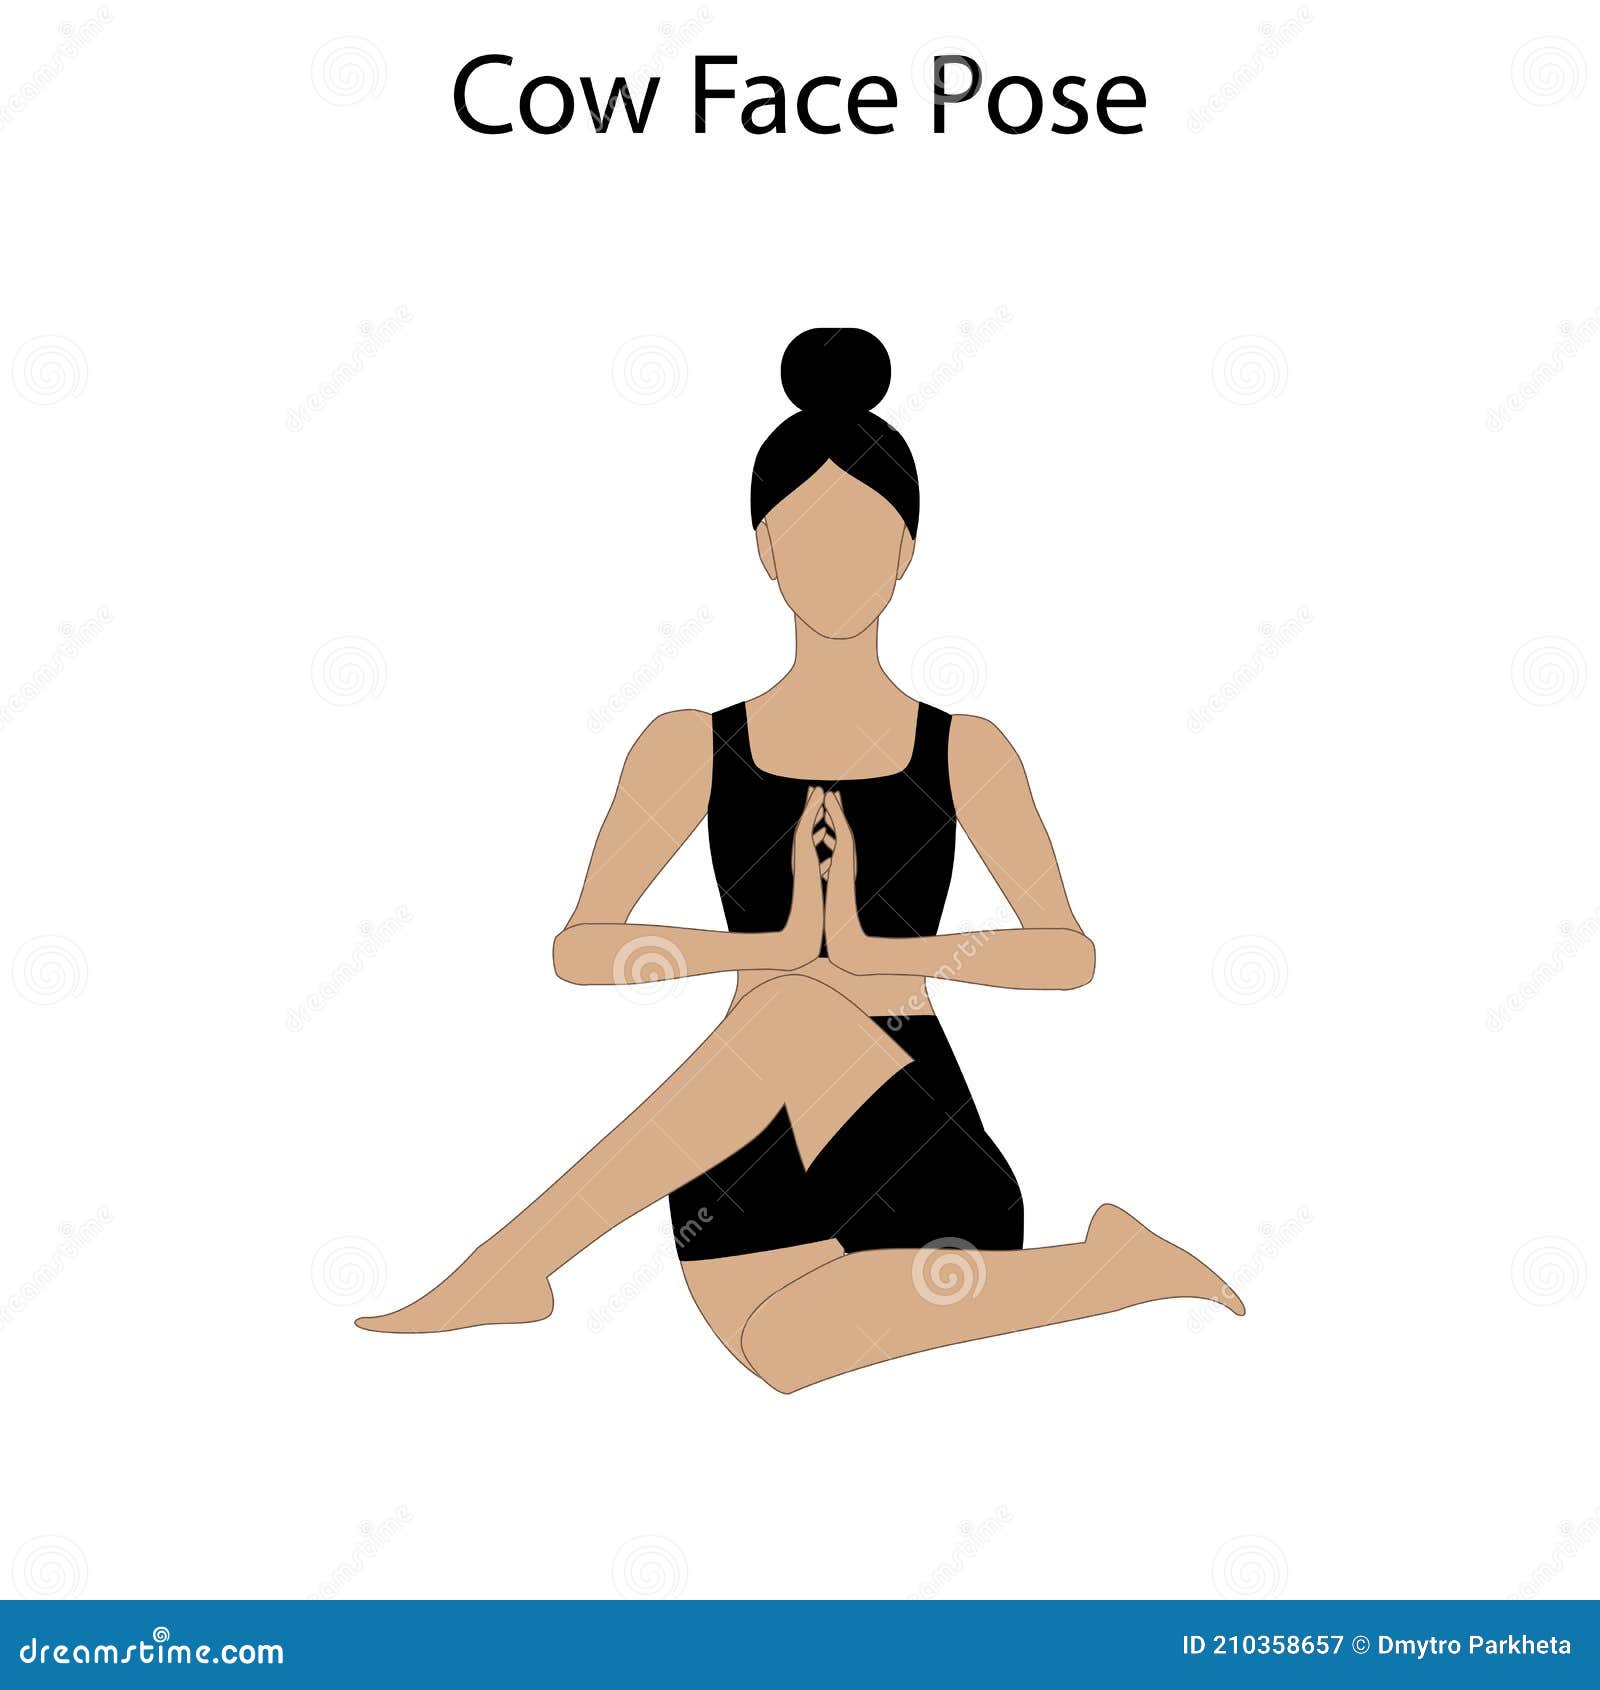 Cow Face Pose (Gomukhasana): How to Do & Benefits - Fitsri